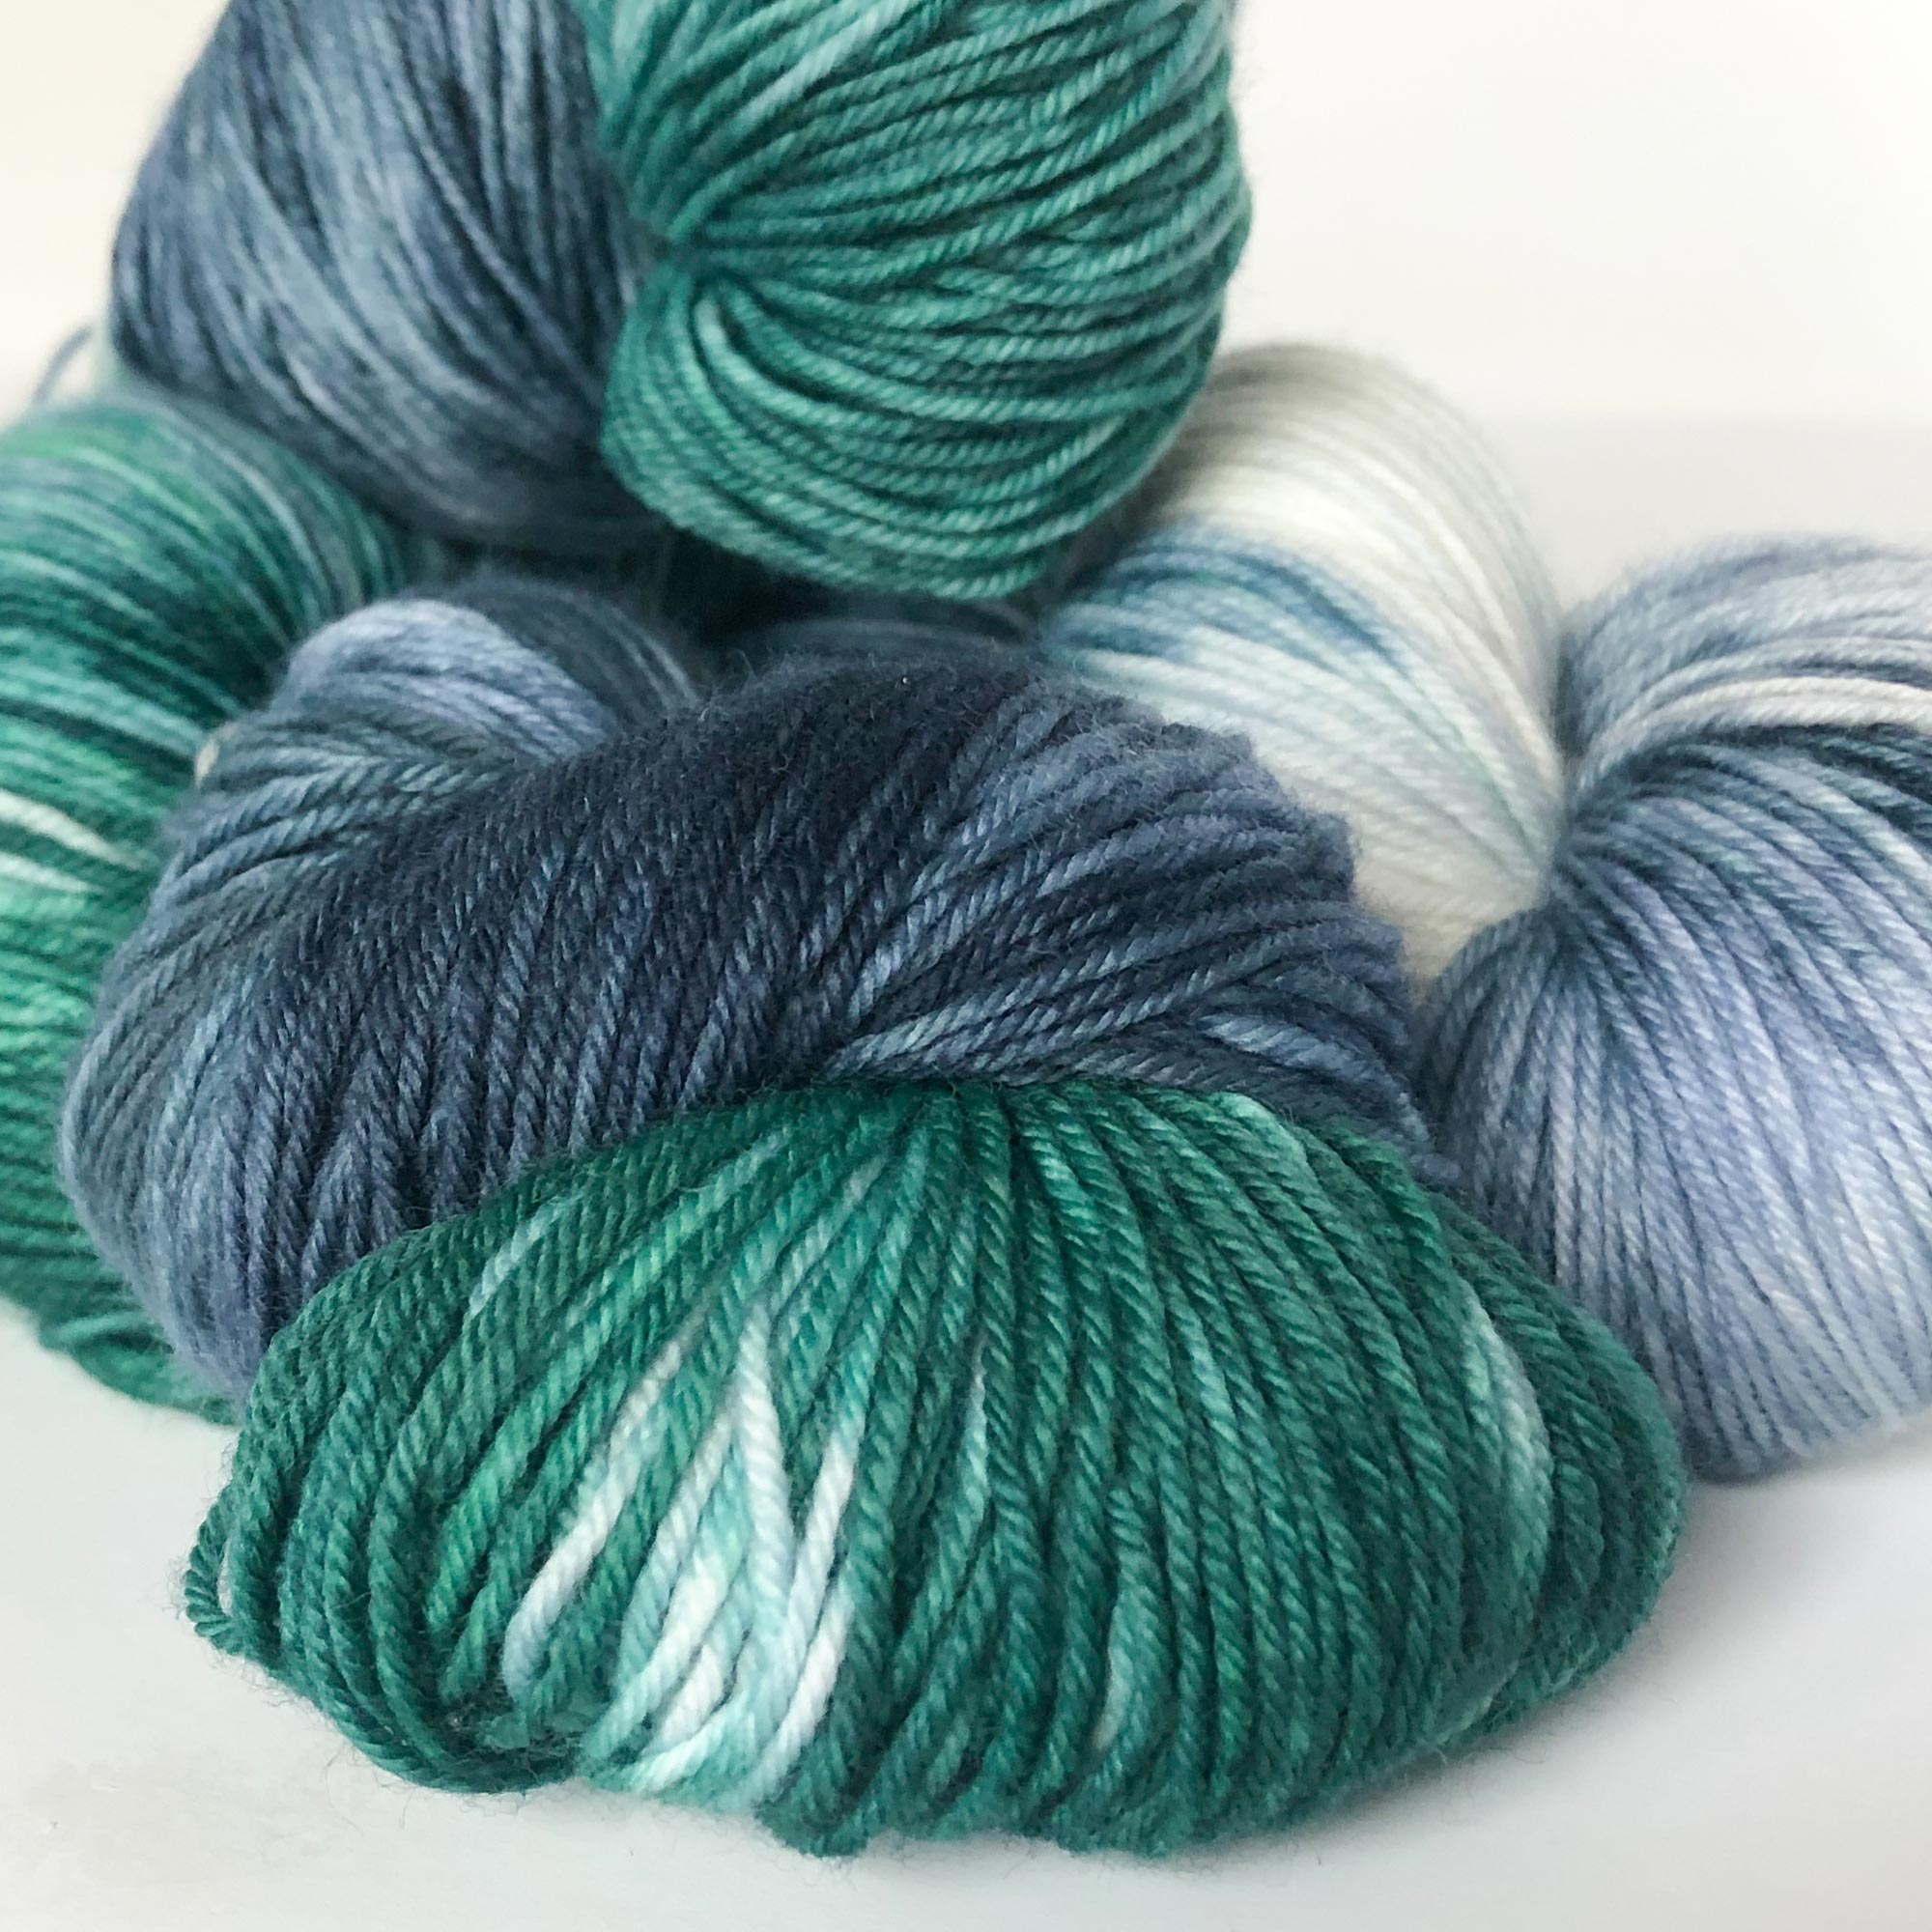 green and navy blue sock yarn close up 